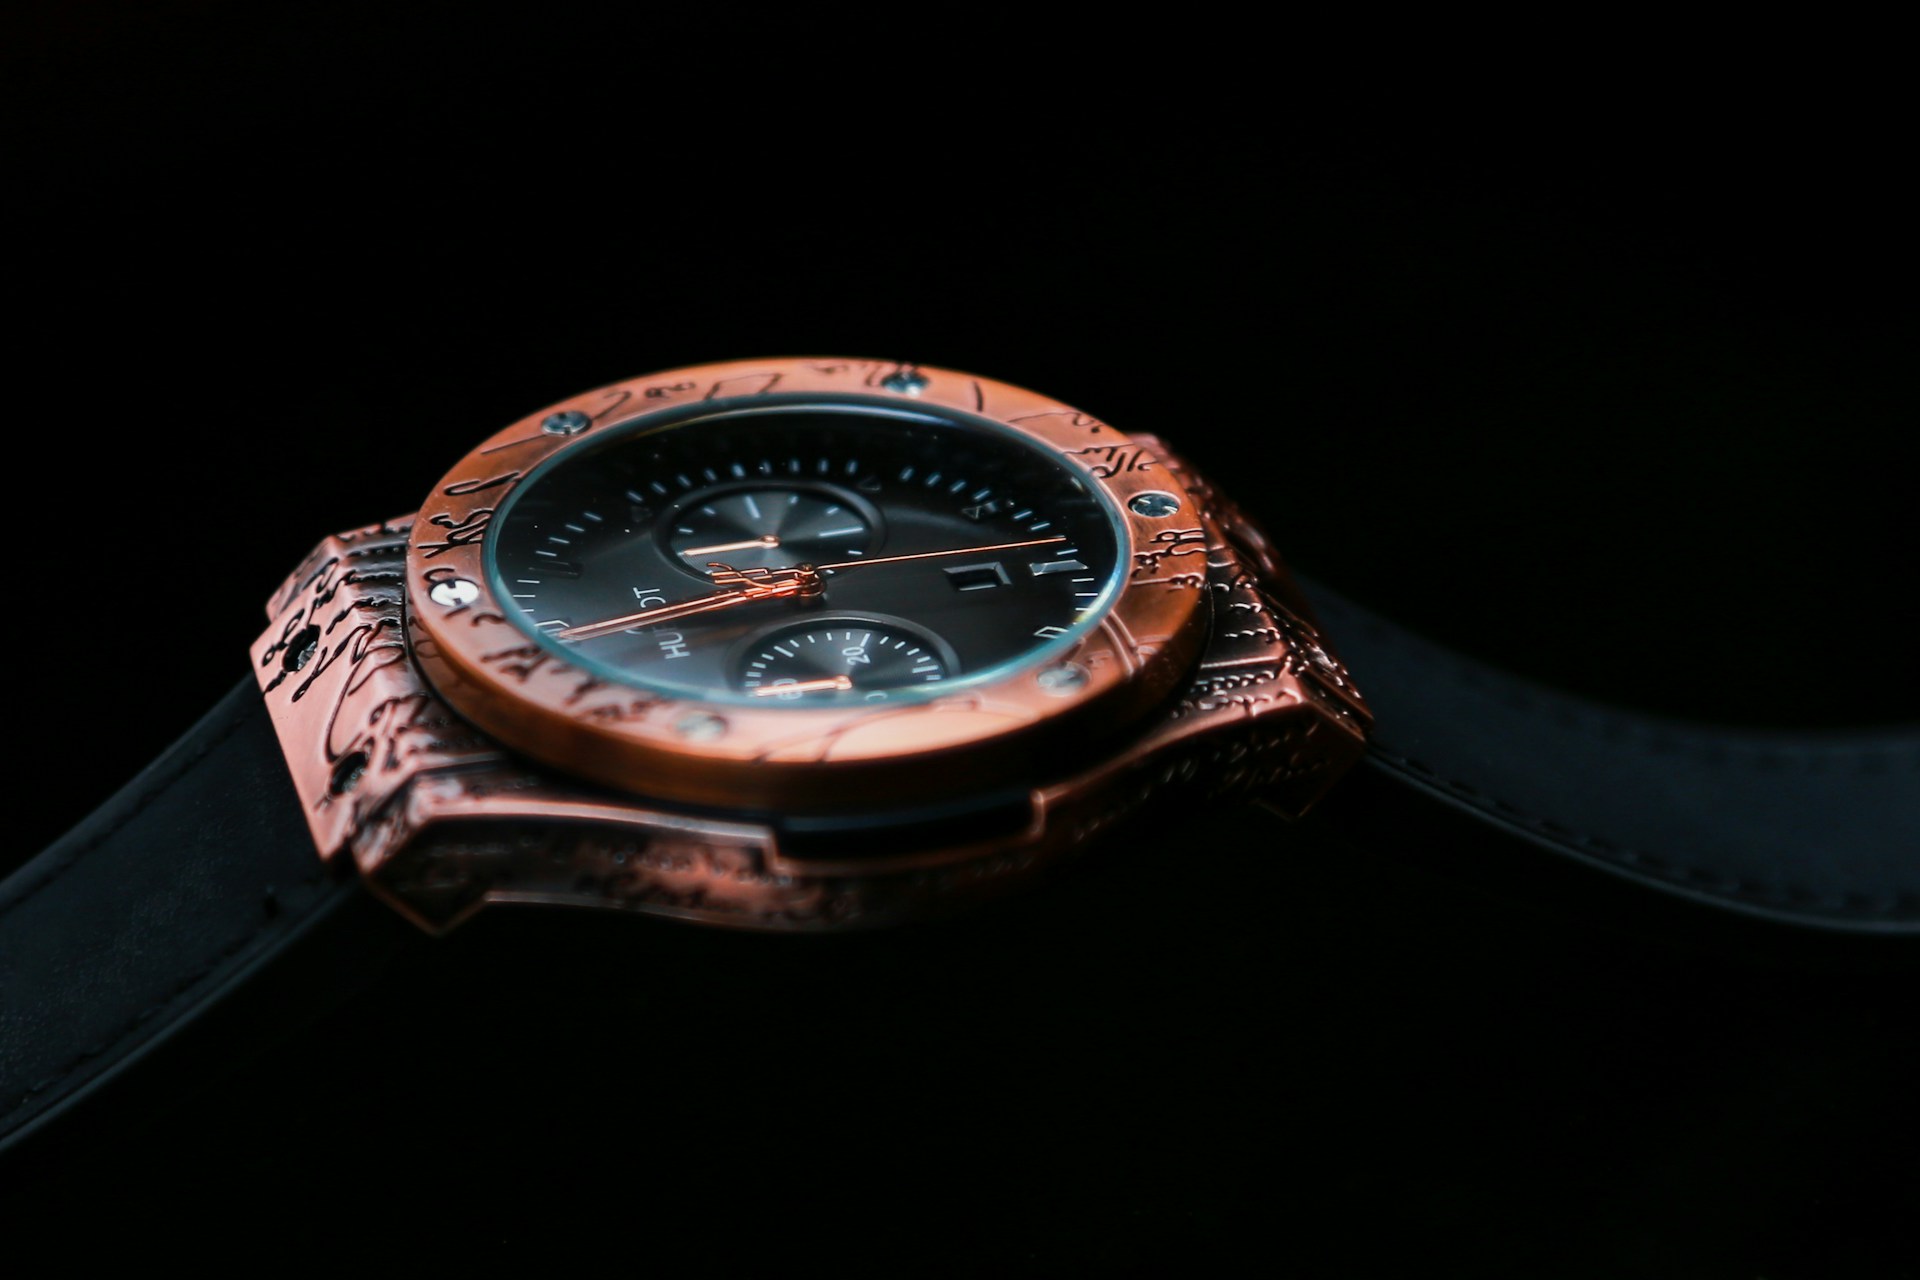 A close-up of a unique vintage-style wristwatch on a black backdrop.